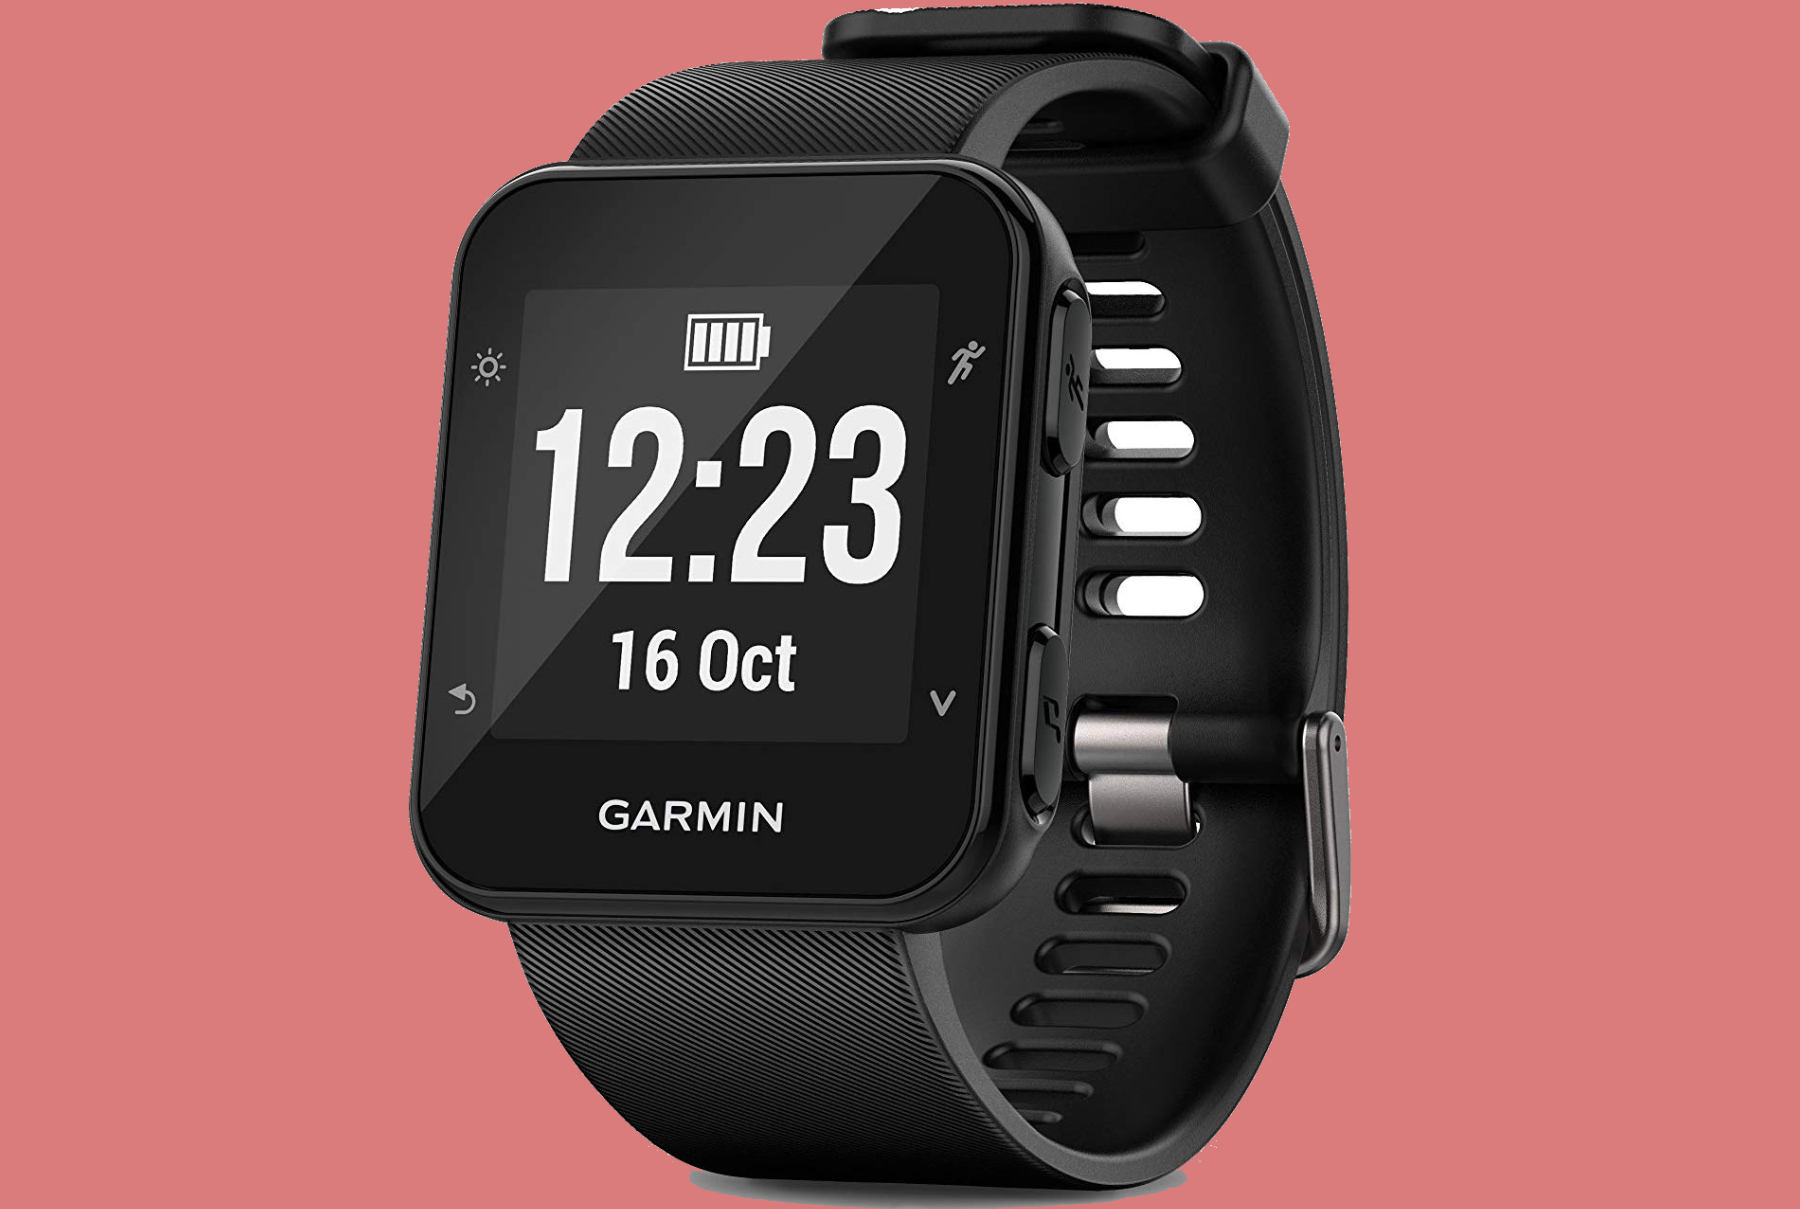 amazon slashes prices on garmin vivoactive 3 smartwatches forerunner 35 01  1